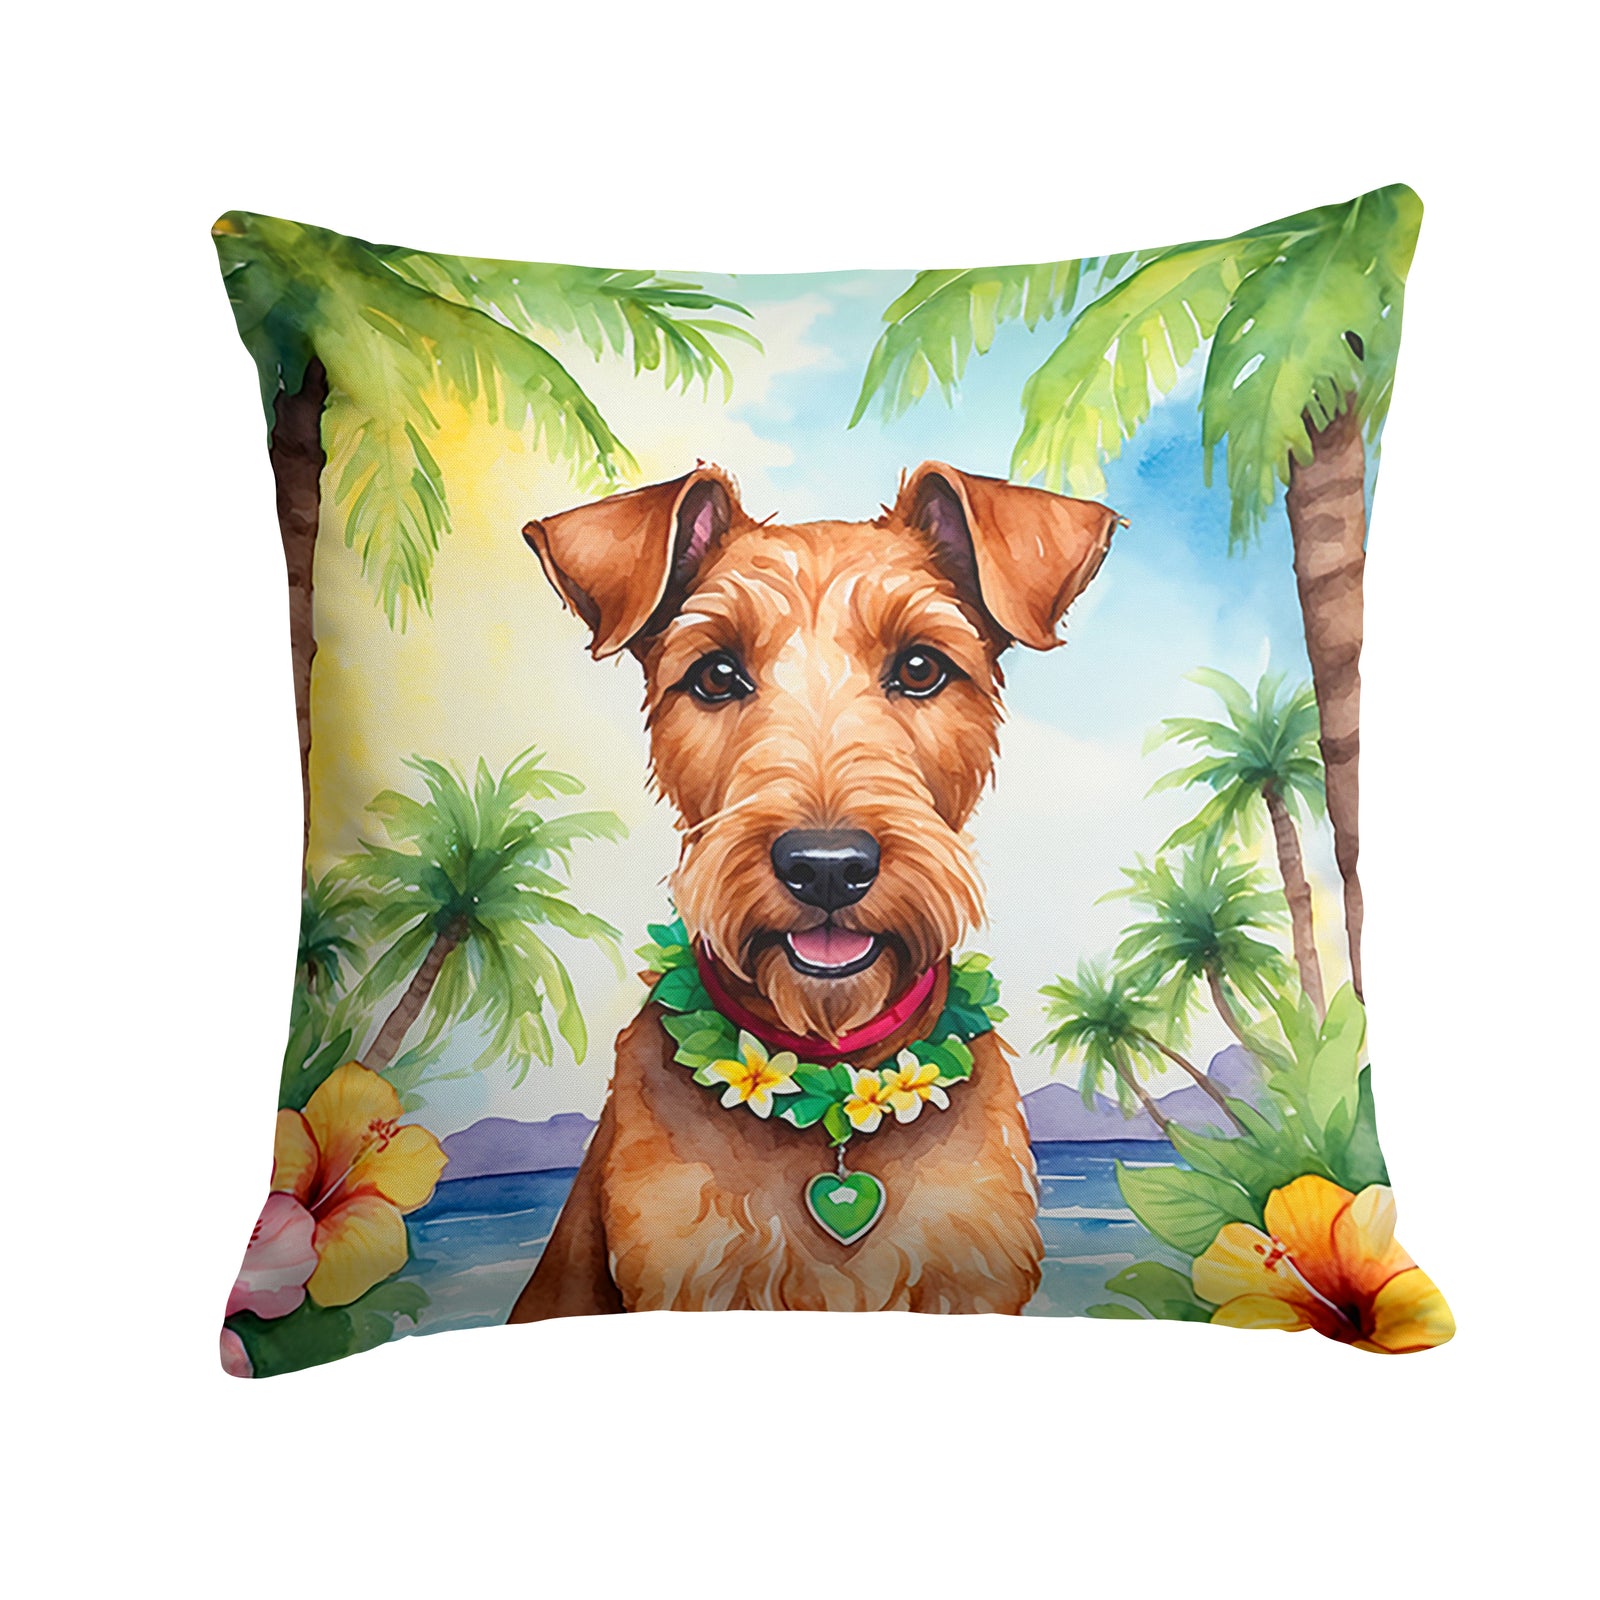 Buy this Irish Terrier Luau Throw Pillow